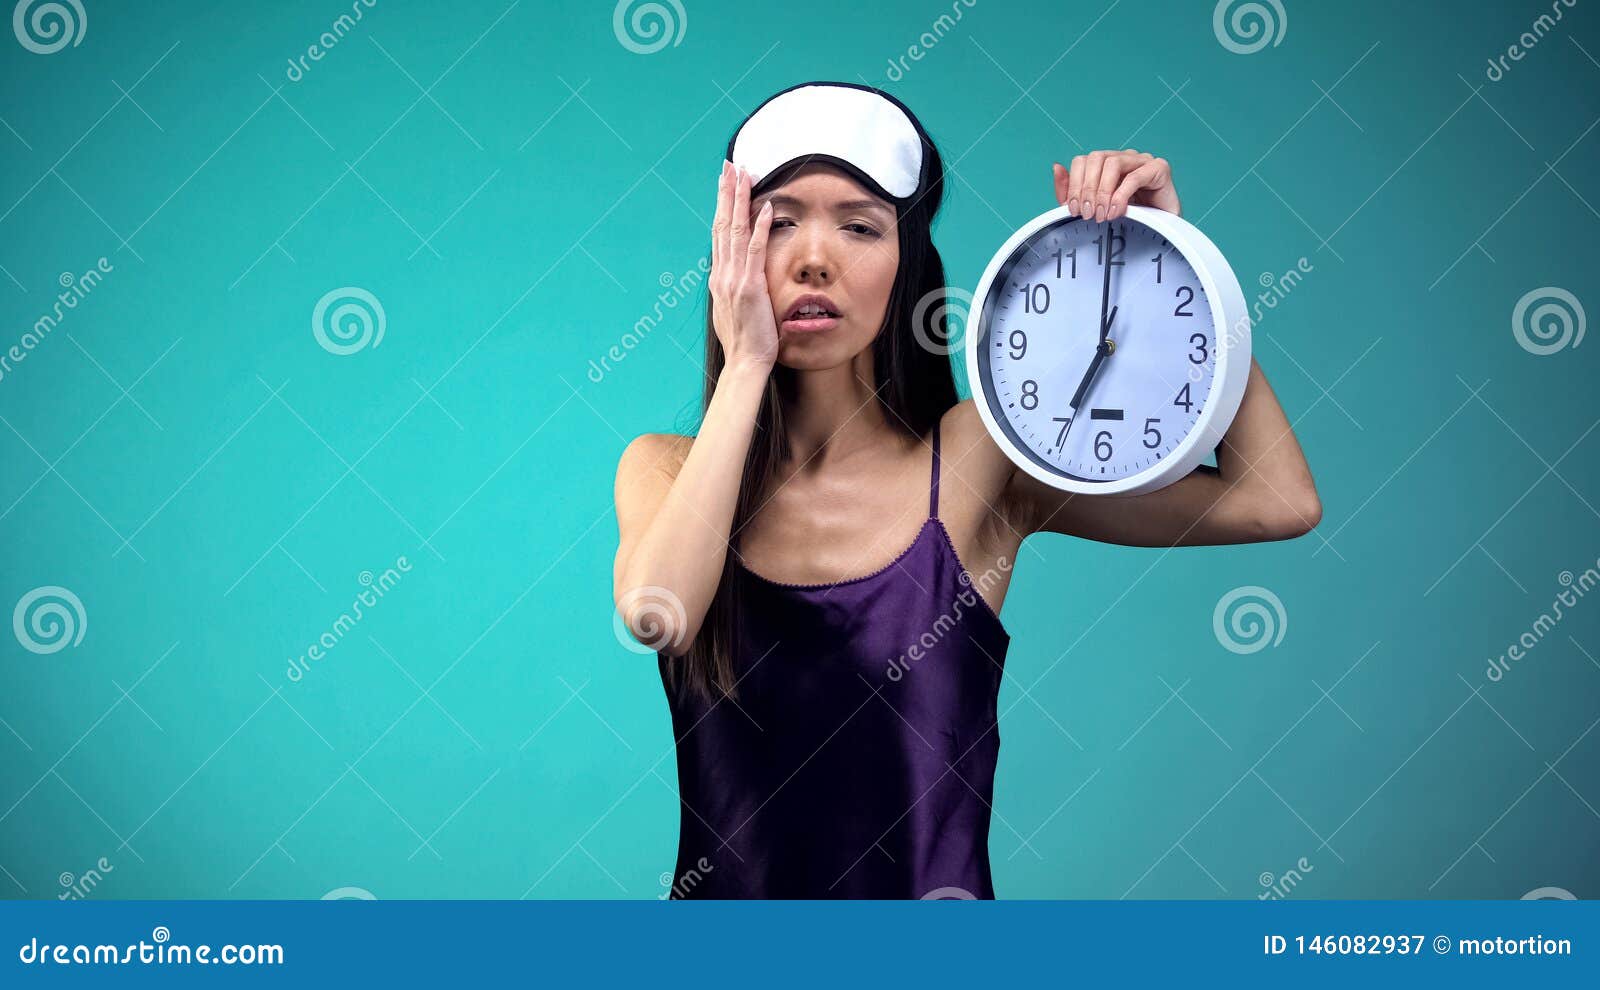 sleepy woman cant wake up at 7 oclock, bad sleep conditions, biological rhythm